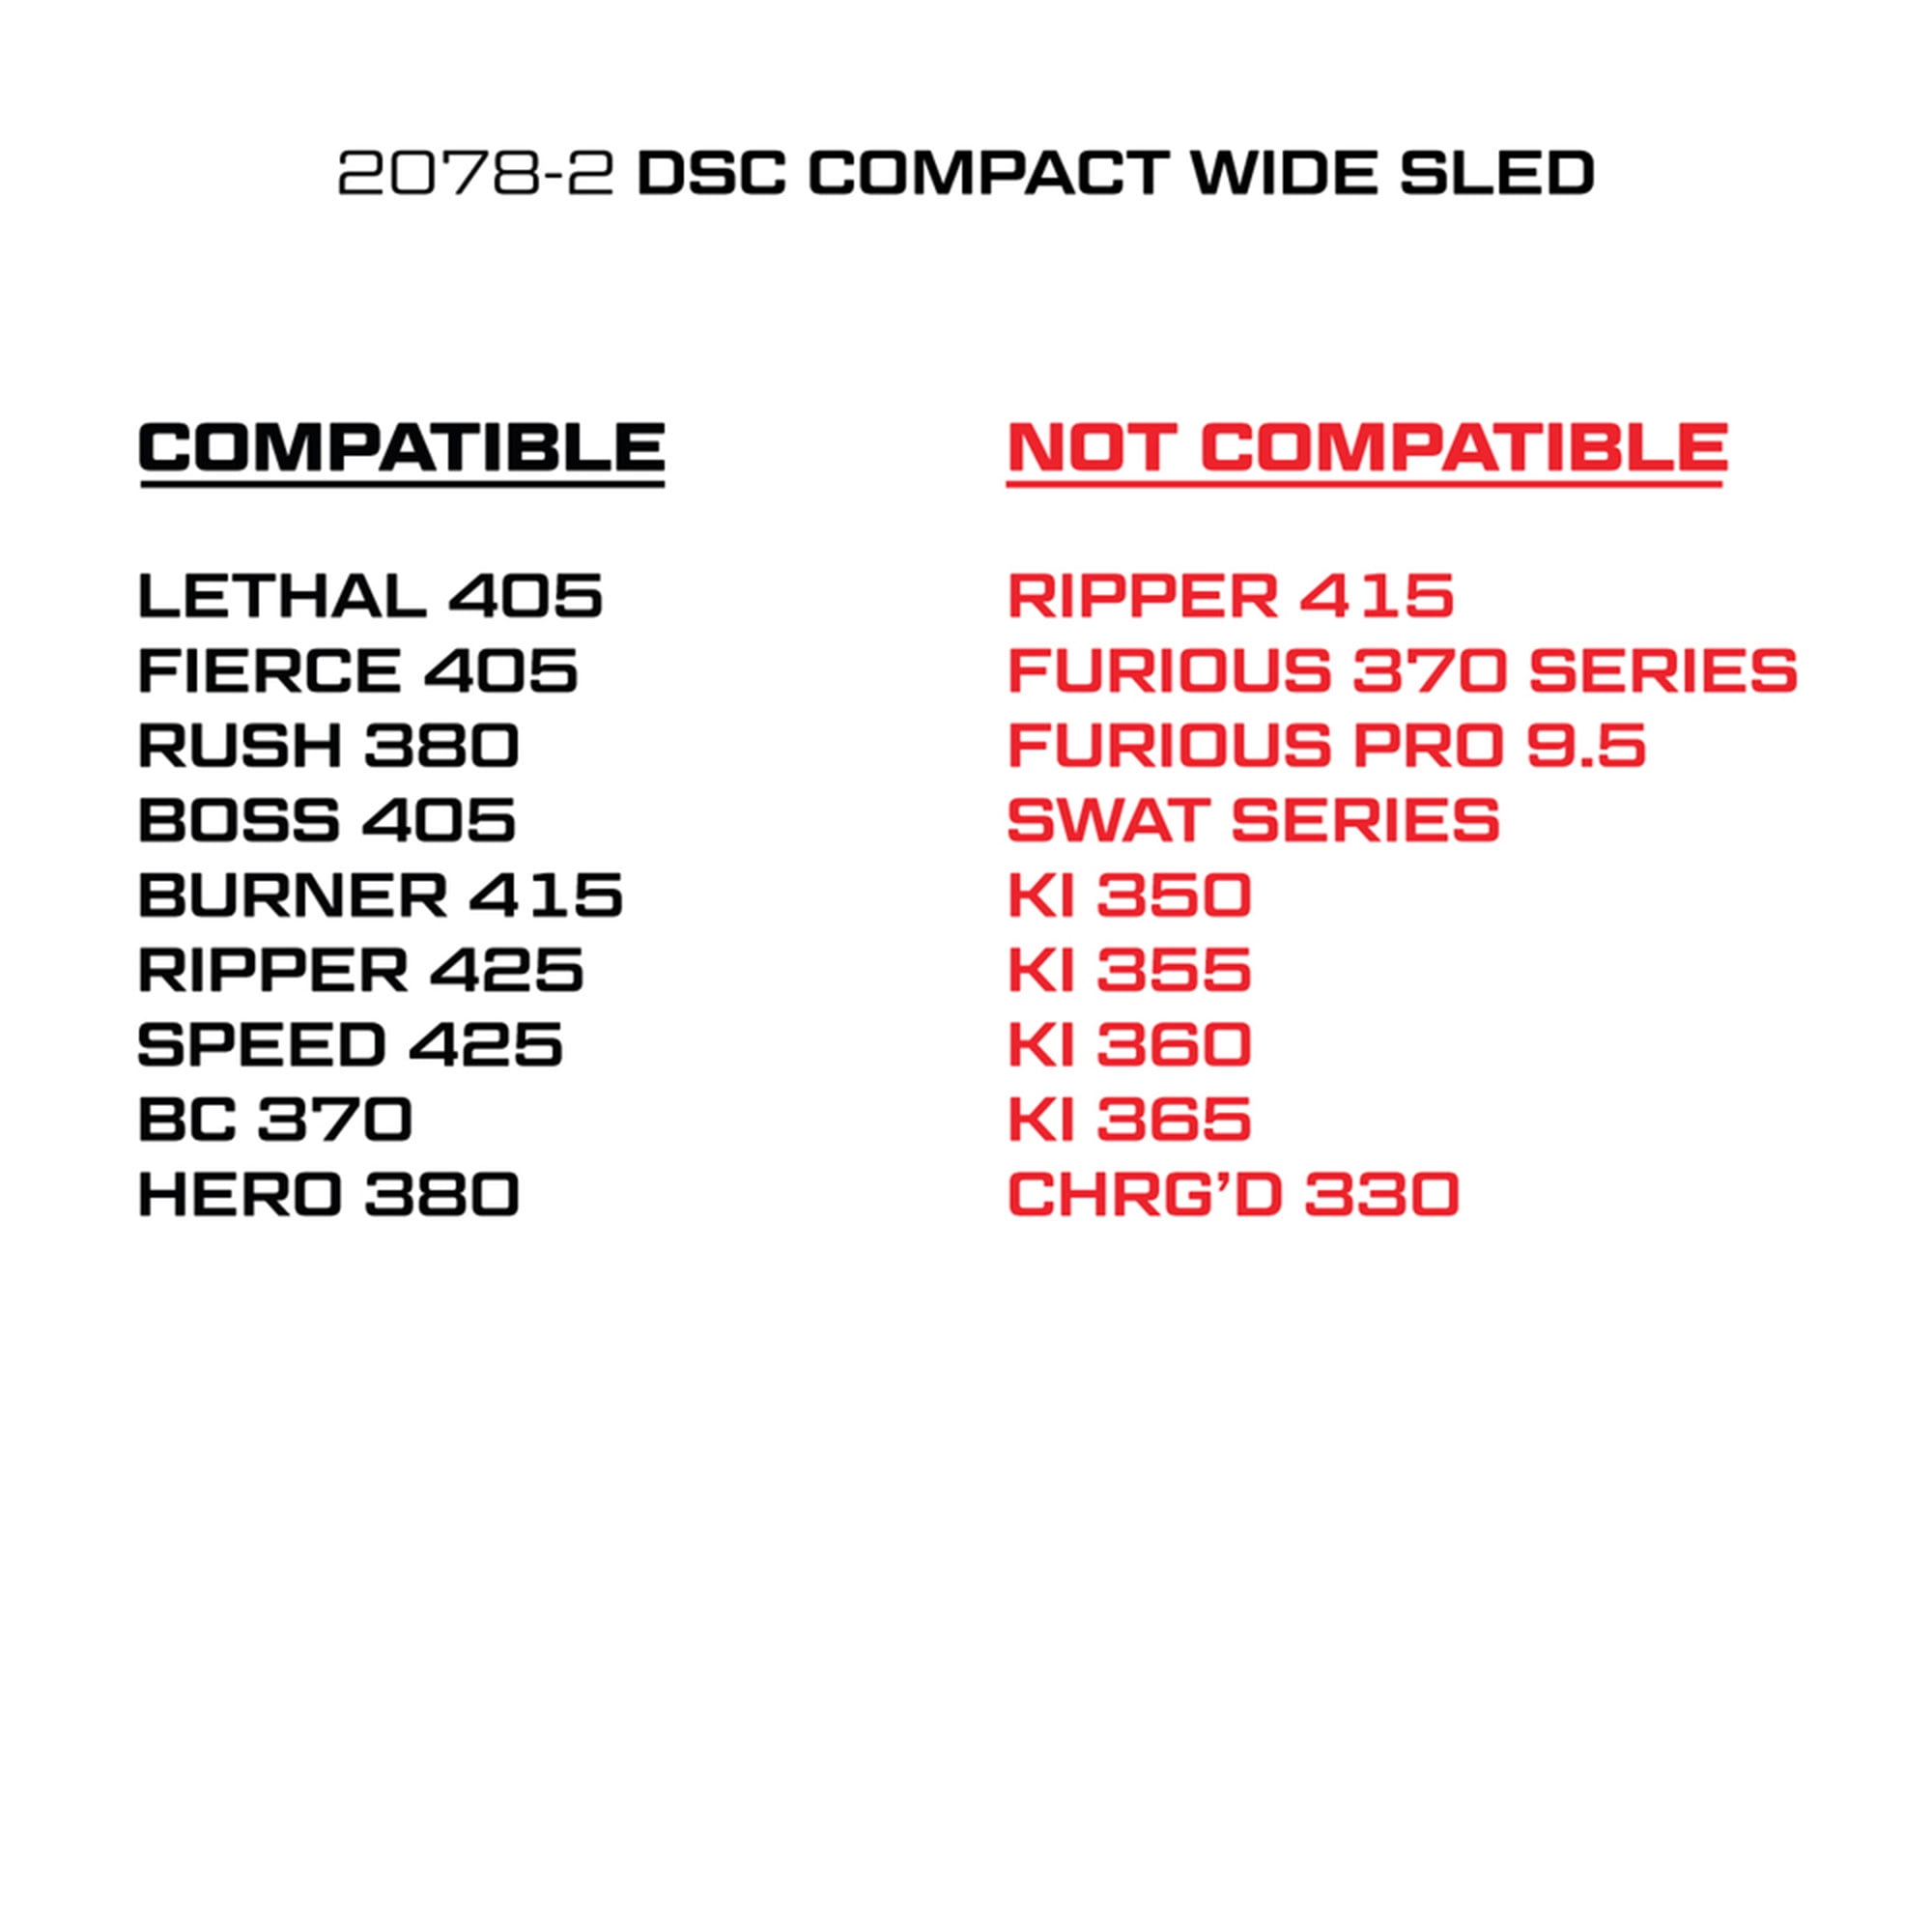 Killer Instinct Compact DSC Crank Wide Slide 